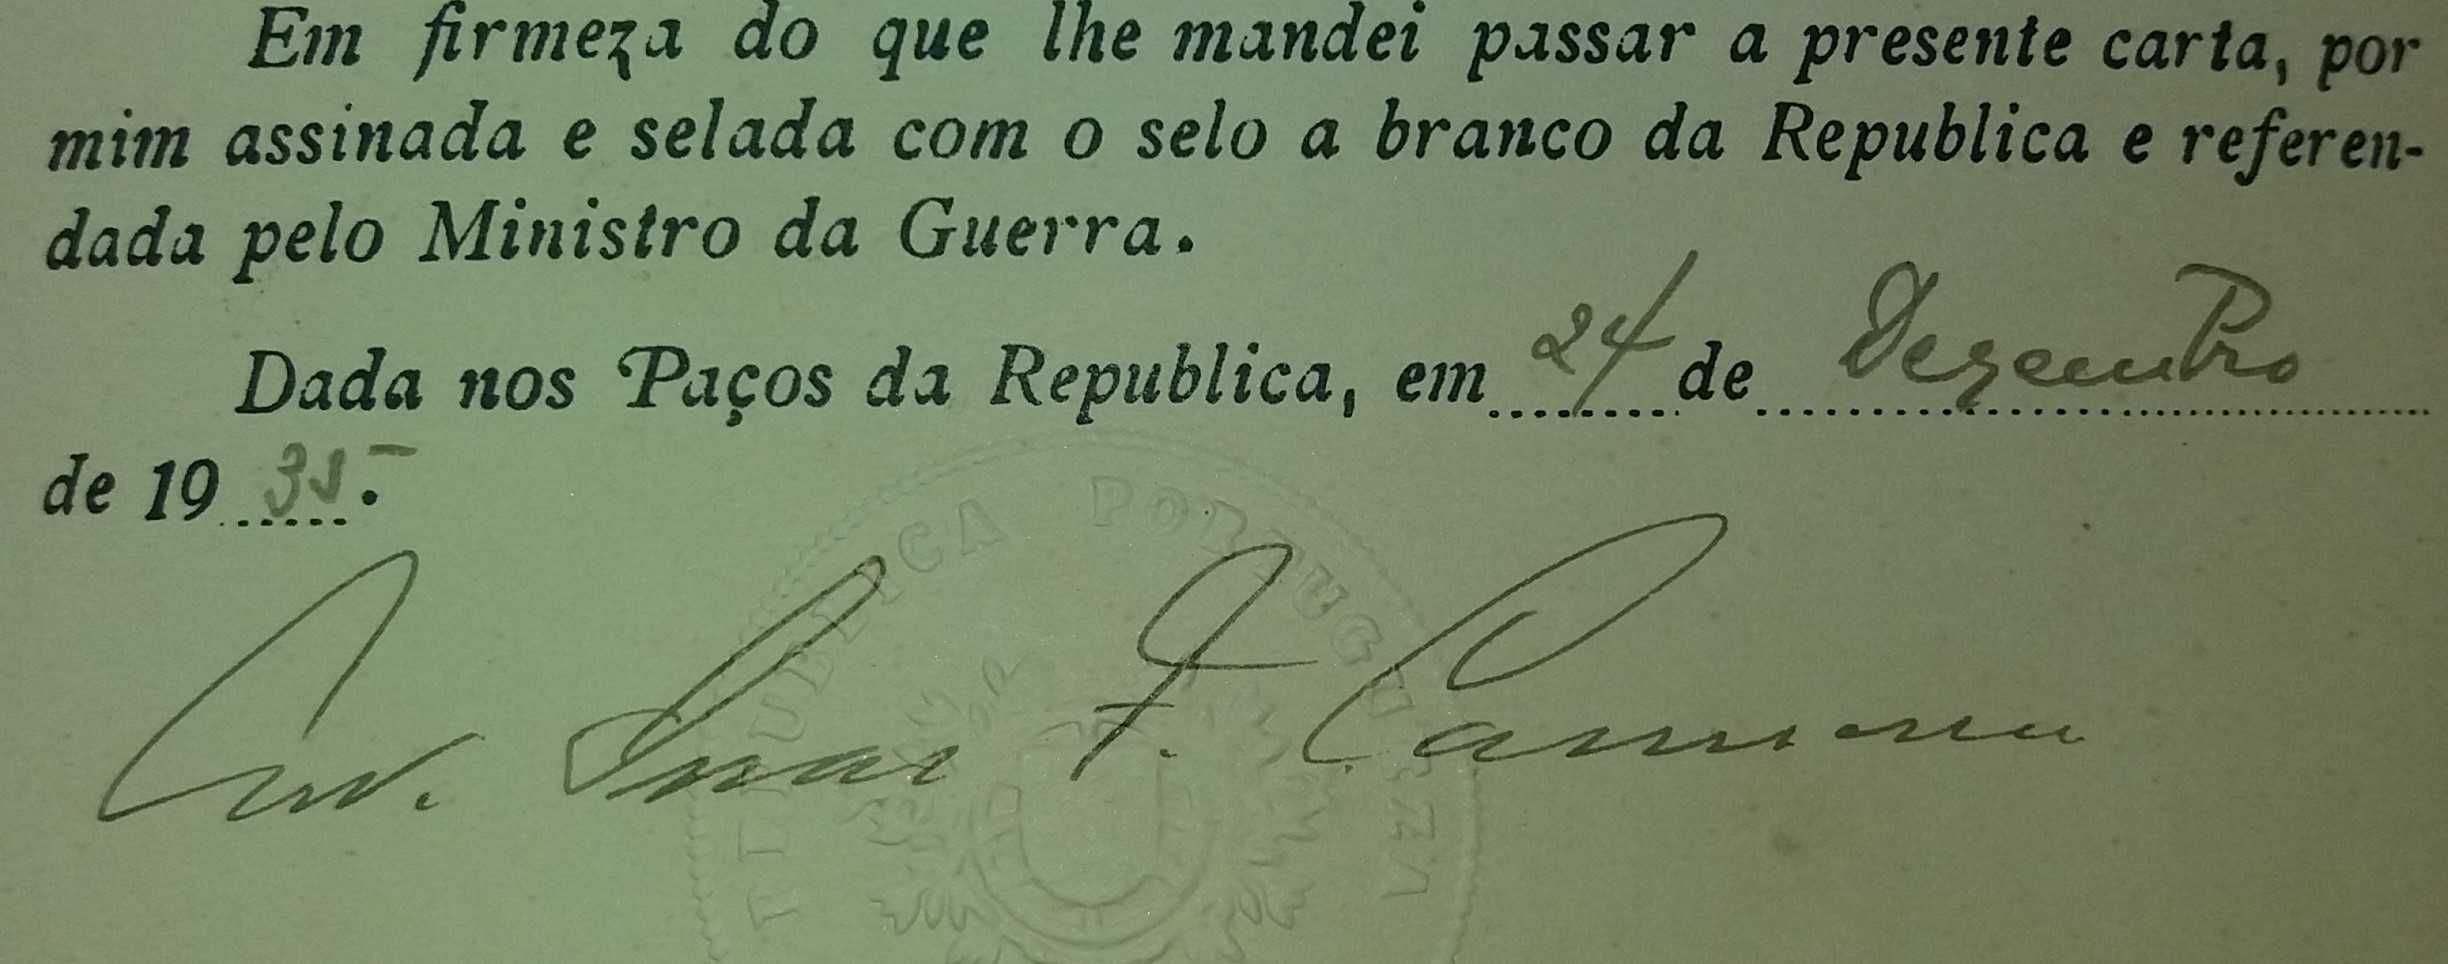 Carta patente militar assinada pelo Marechal Carmona - Exército